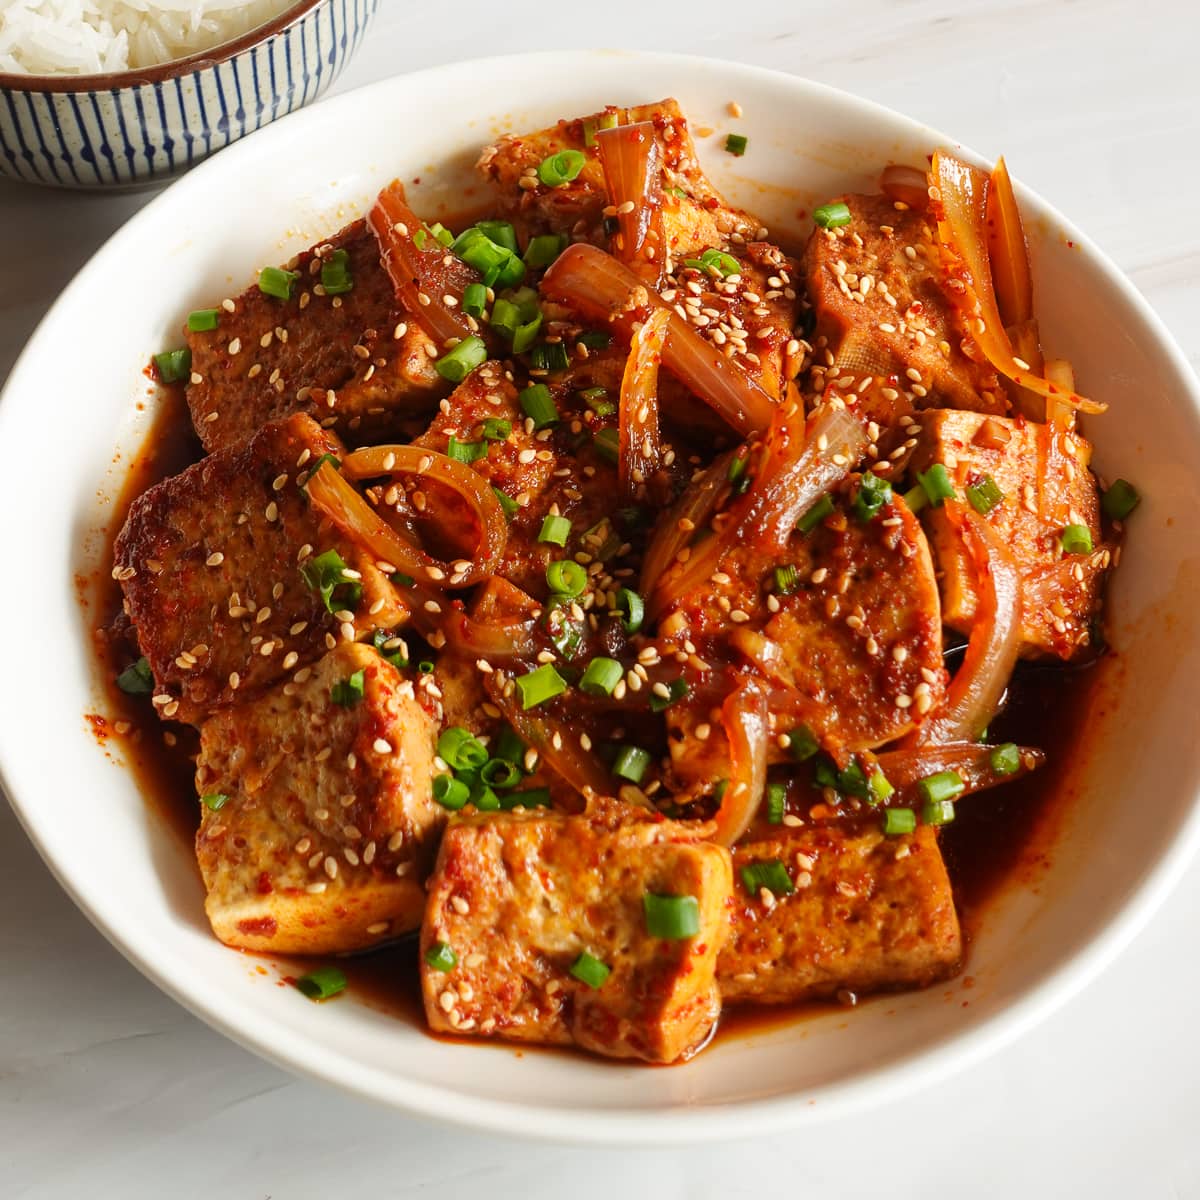 Korean Braised Tofu